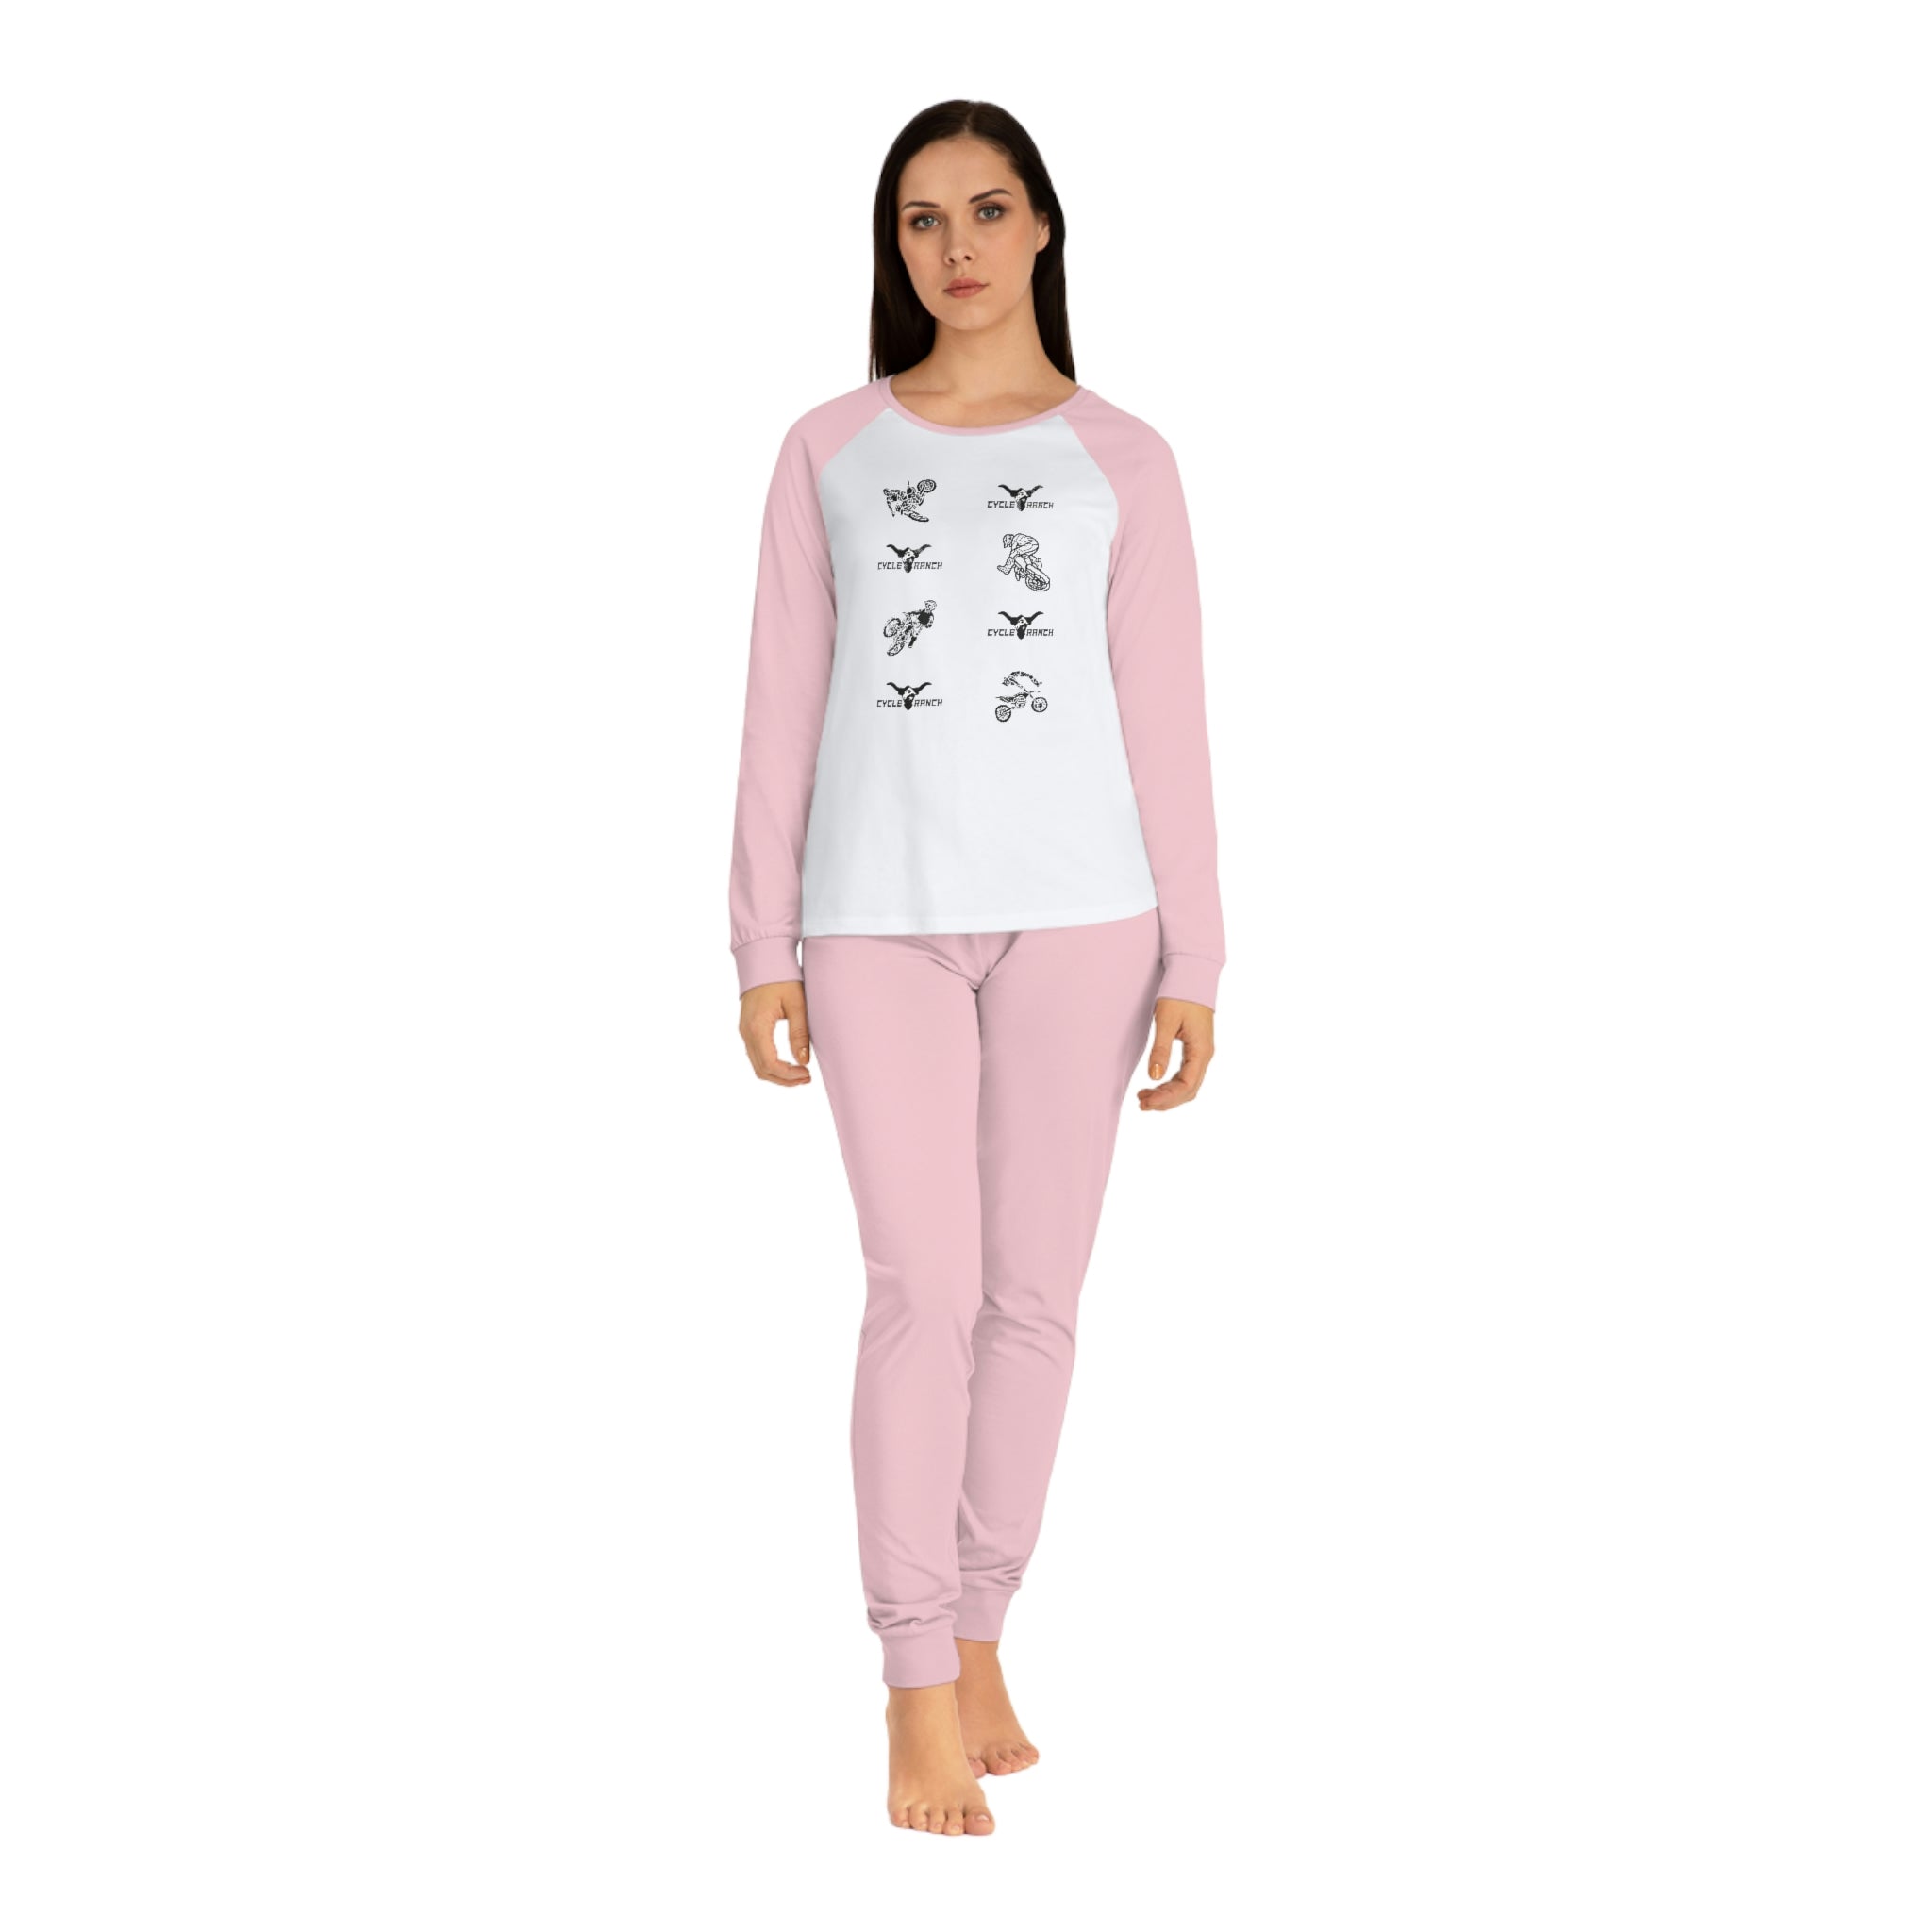 Women's Pajamas and Sleepwear - LazyOne